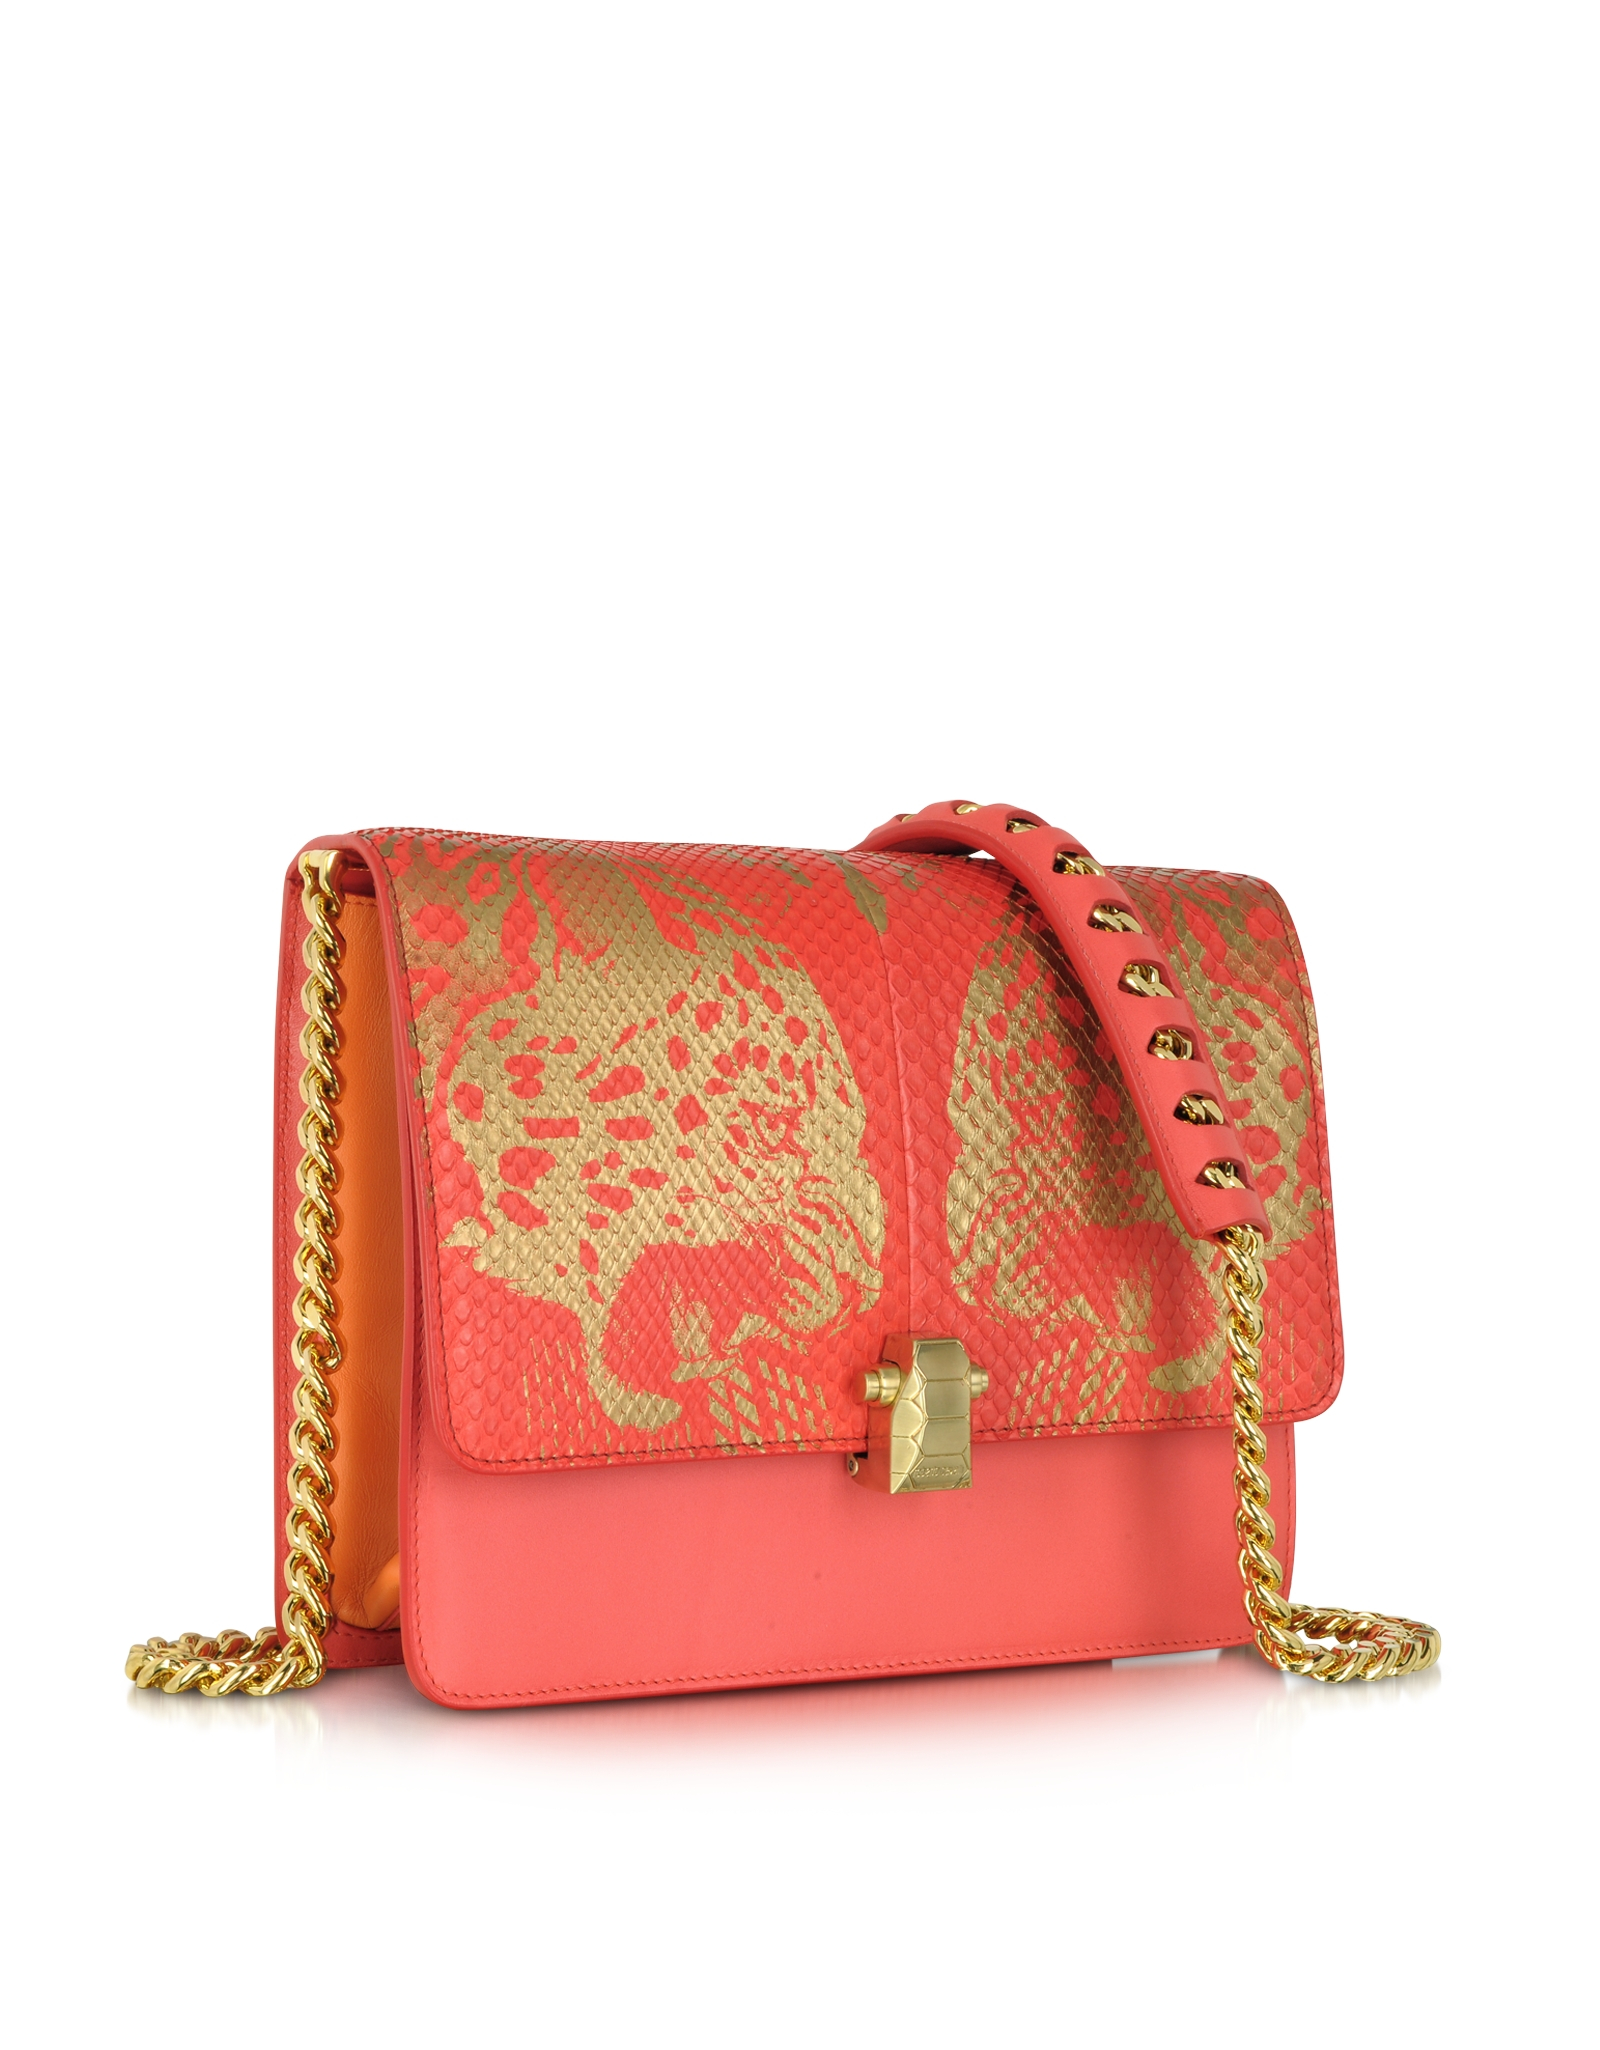 Lyst - Roberto Cavalli Hera Medium Tiger Printed Shoulder Bag in Pink